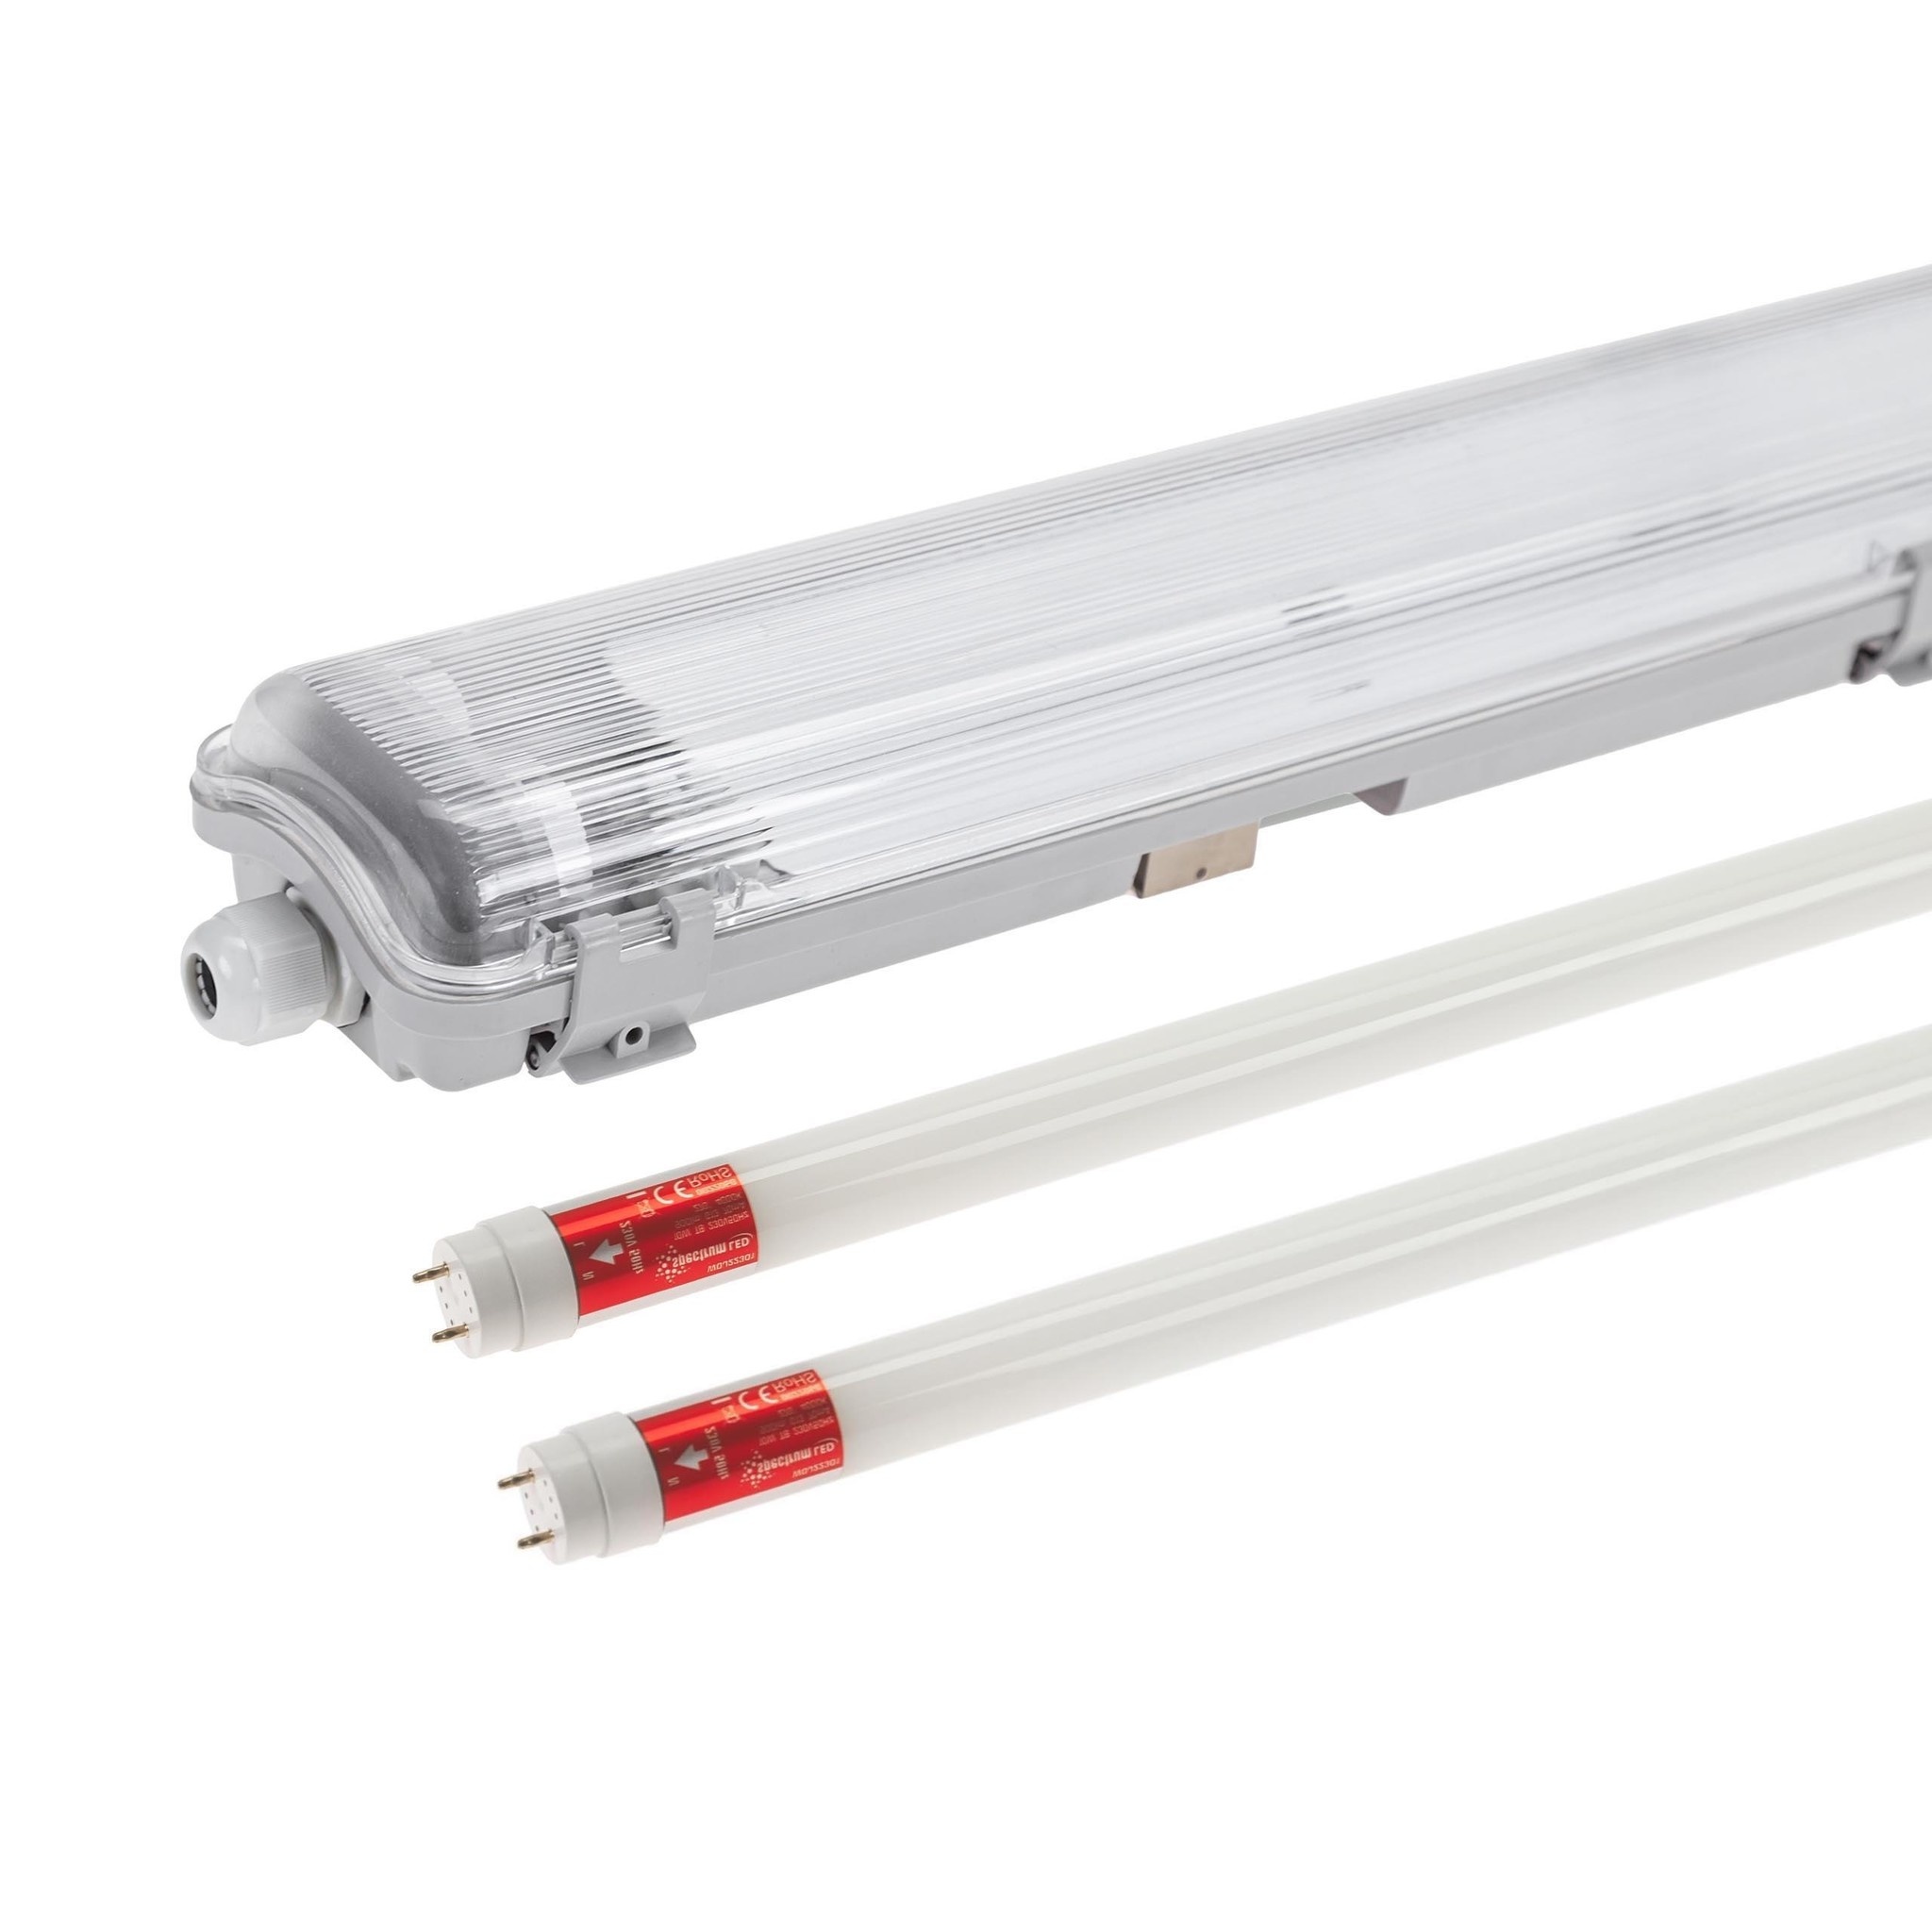 Heel boos gerucht prijs 120cm LED armatuur IP65 + 2 LED TL buizen 18W p/s - 6000K 865 daglicht -  Ledpanelendiscounter.nl